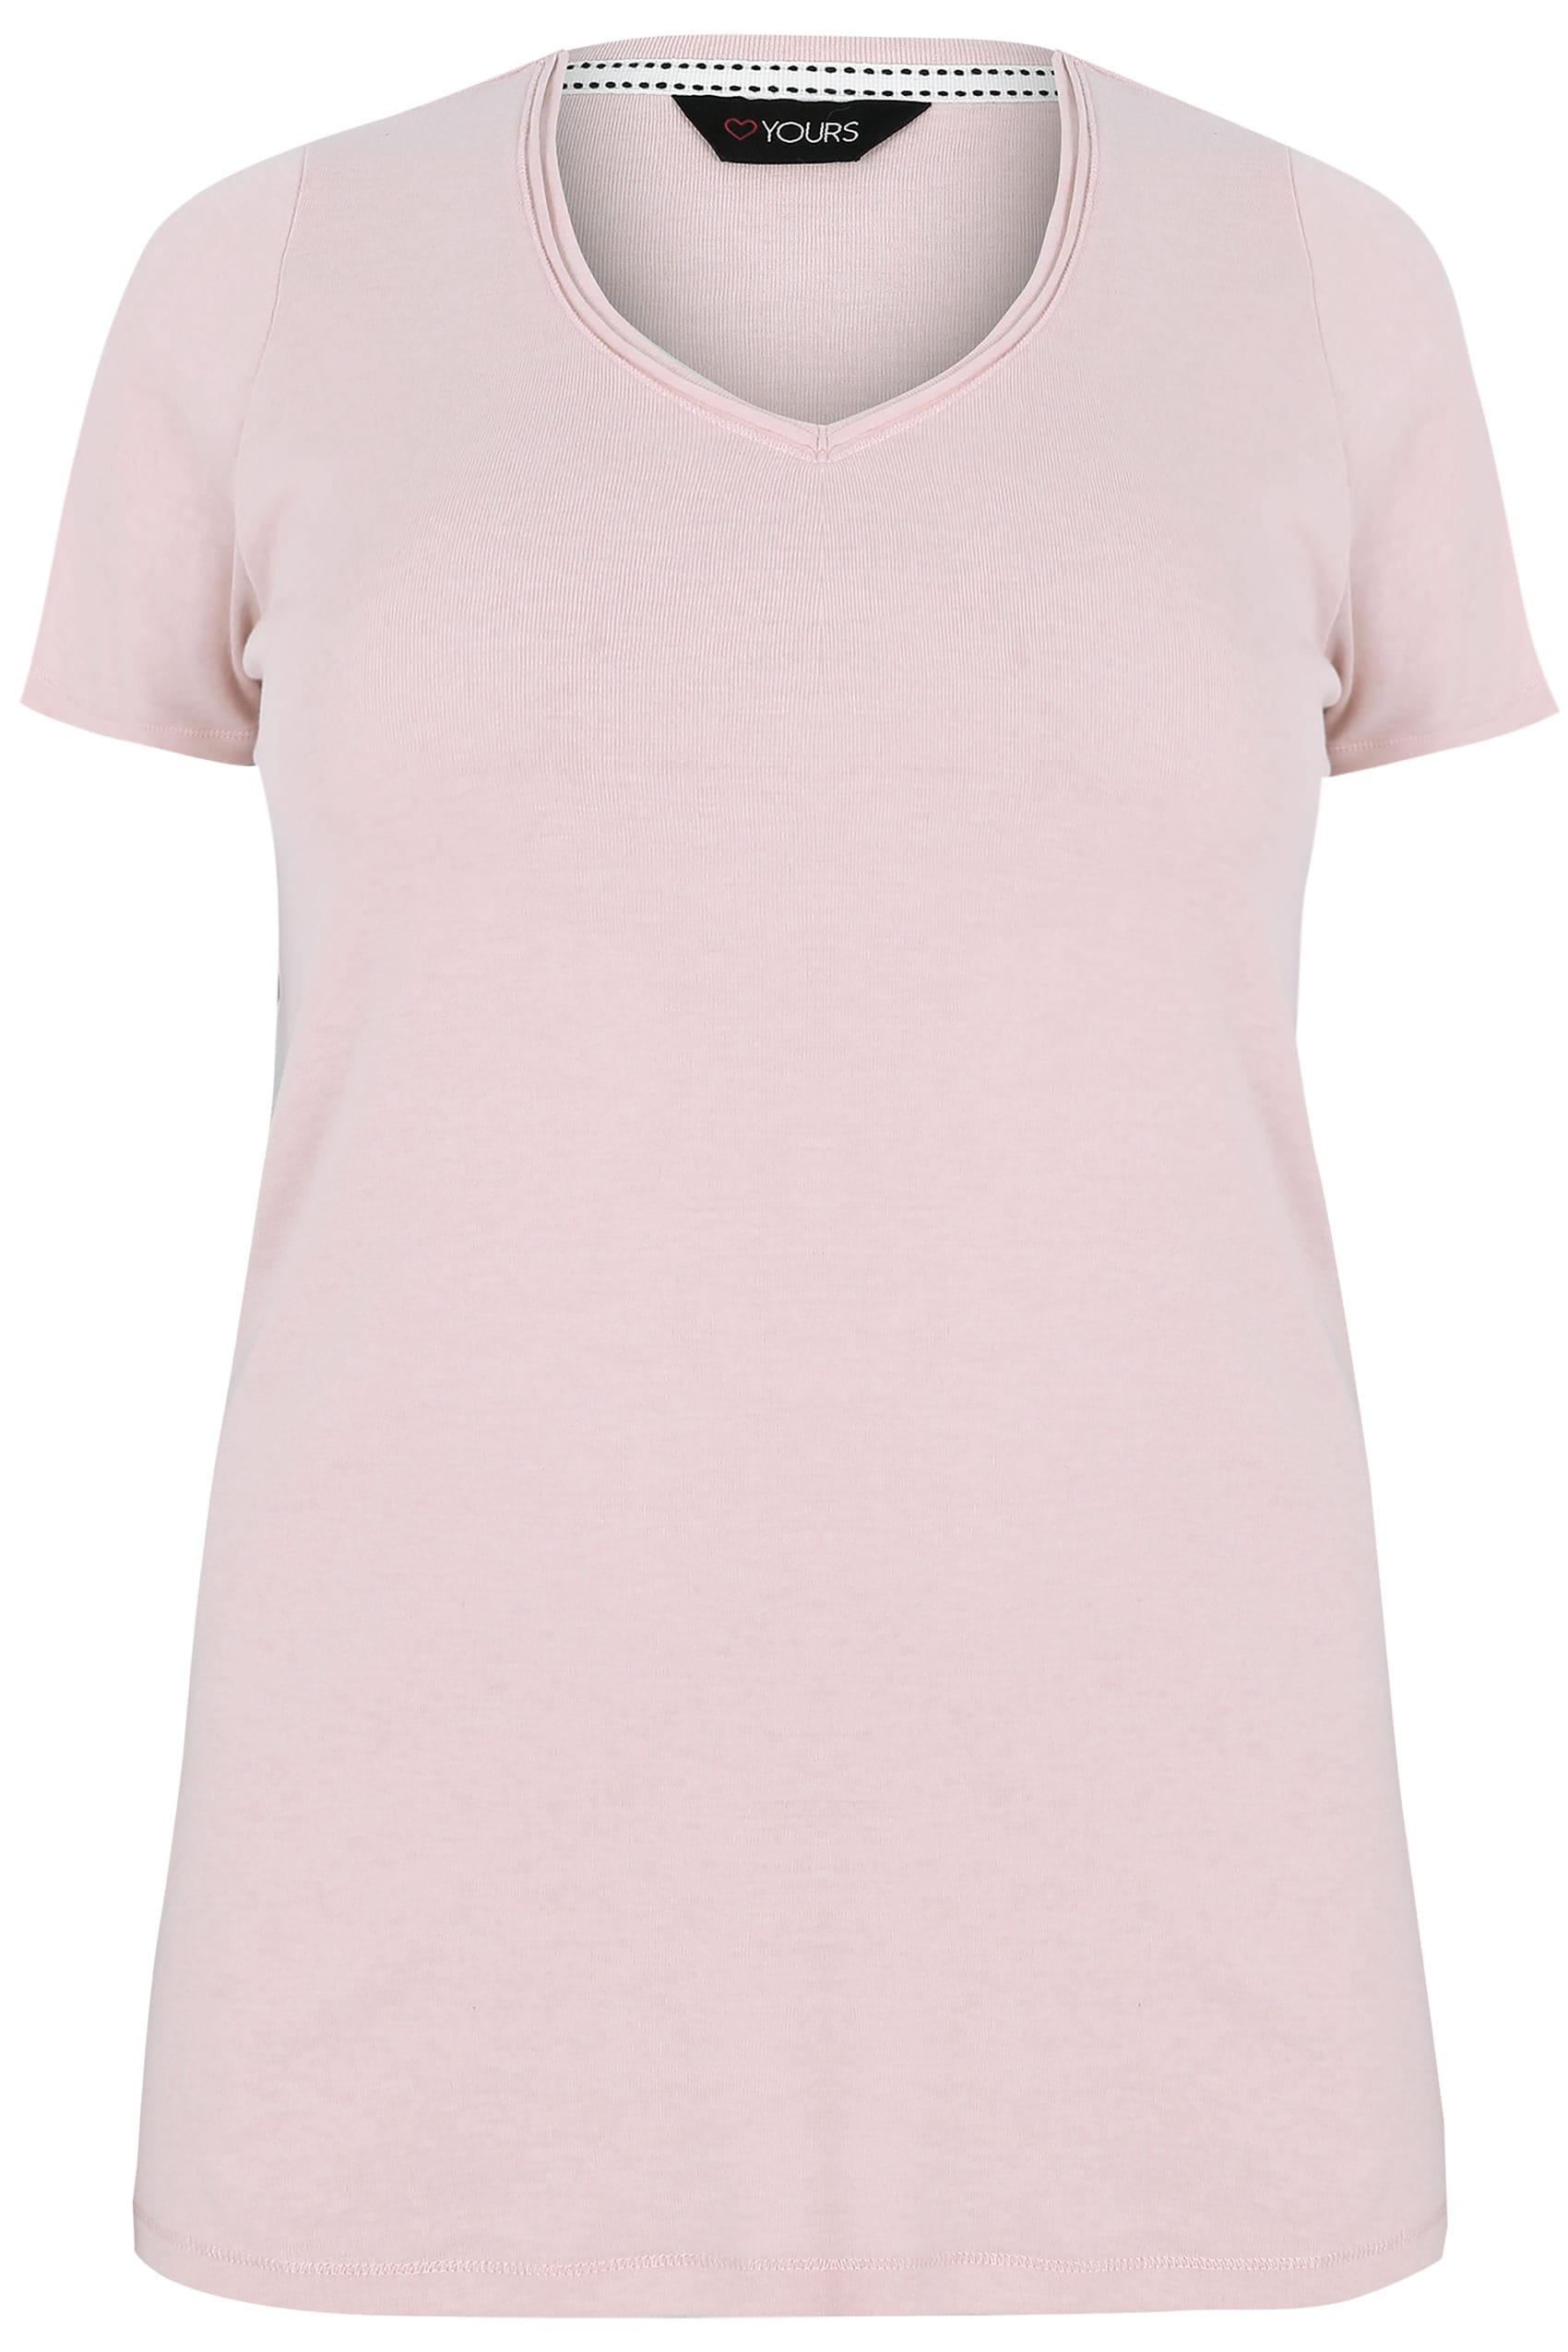 Light Pink Short Sleeved V-Neck Basic T-Shirt, Plus size 16 to 36